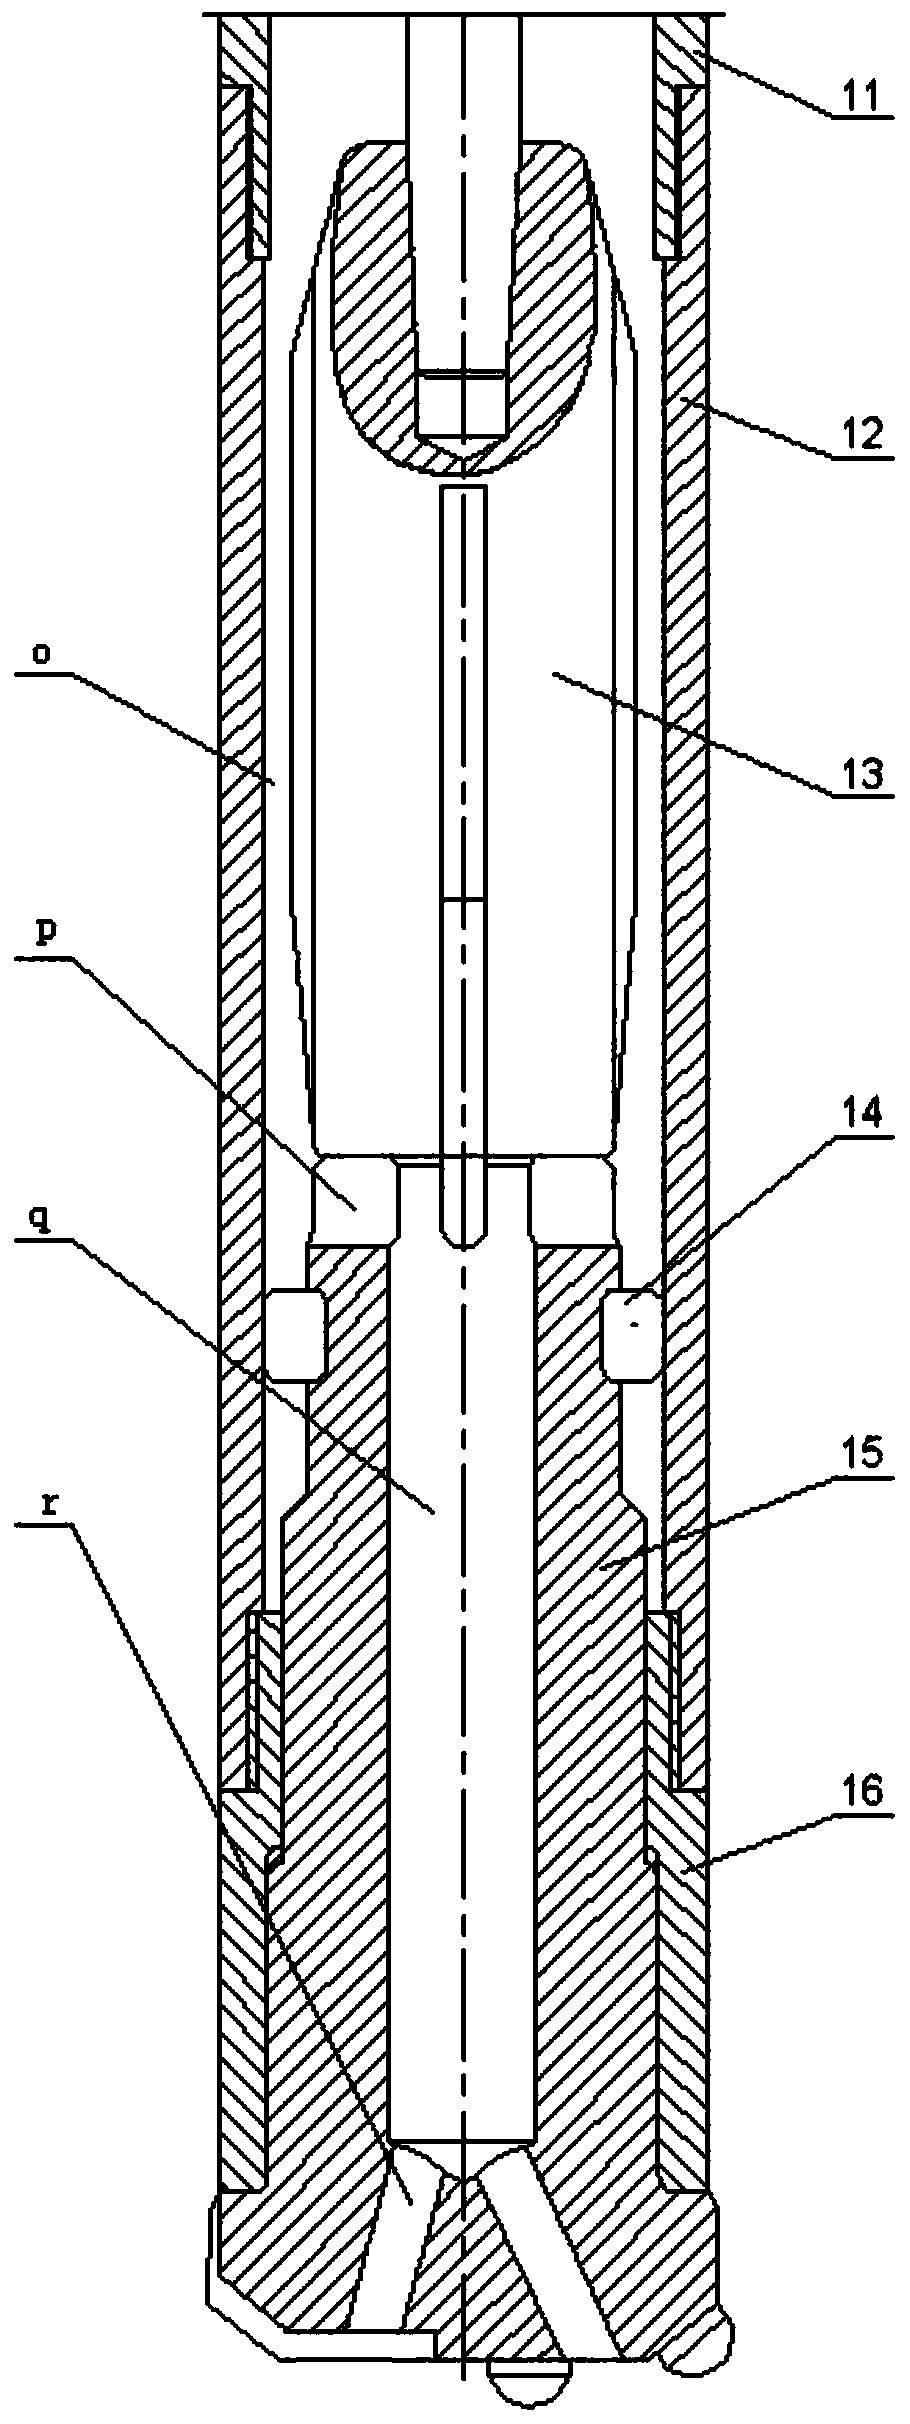 A rotary valve type hydraulic impactor